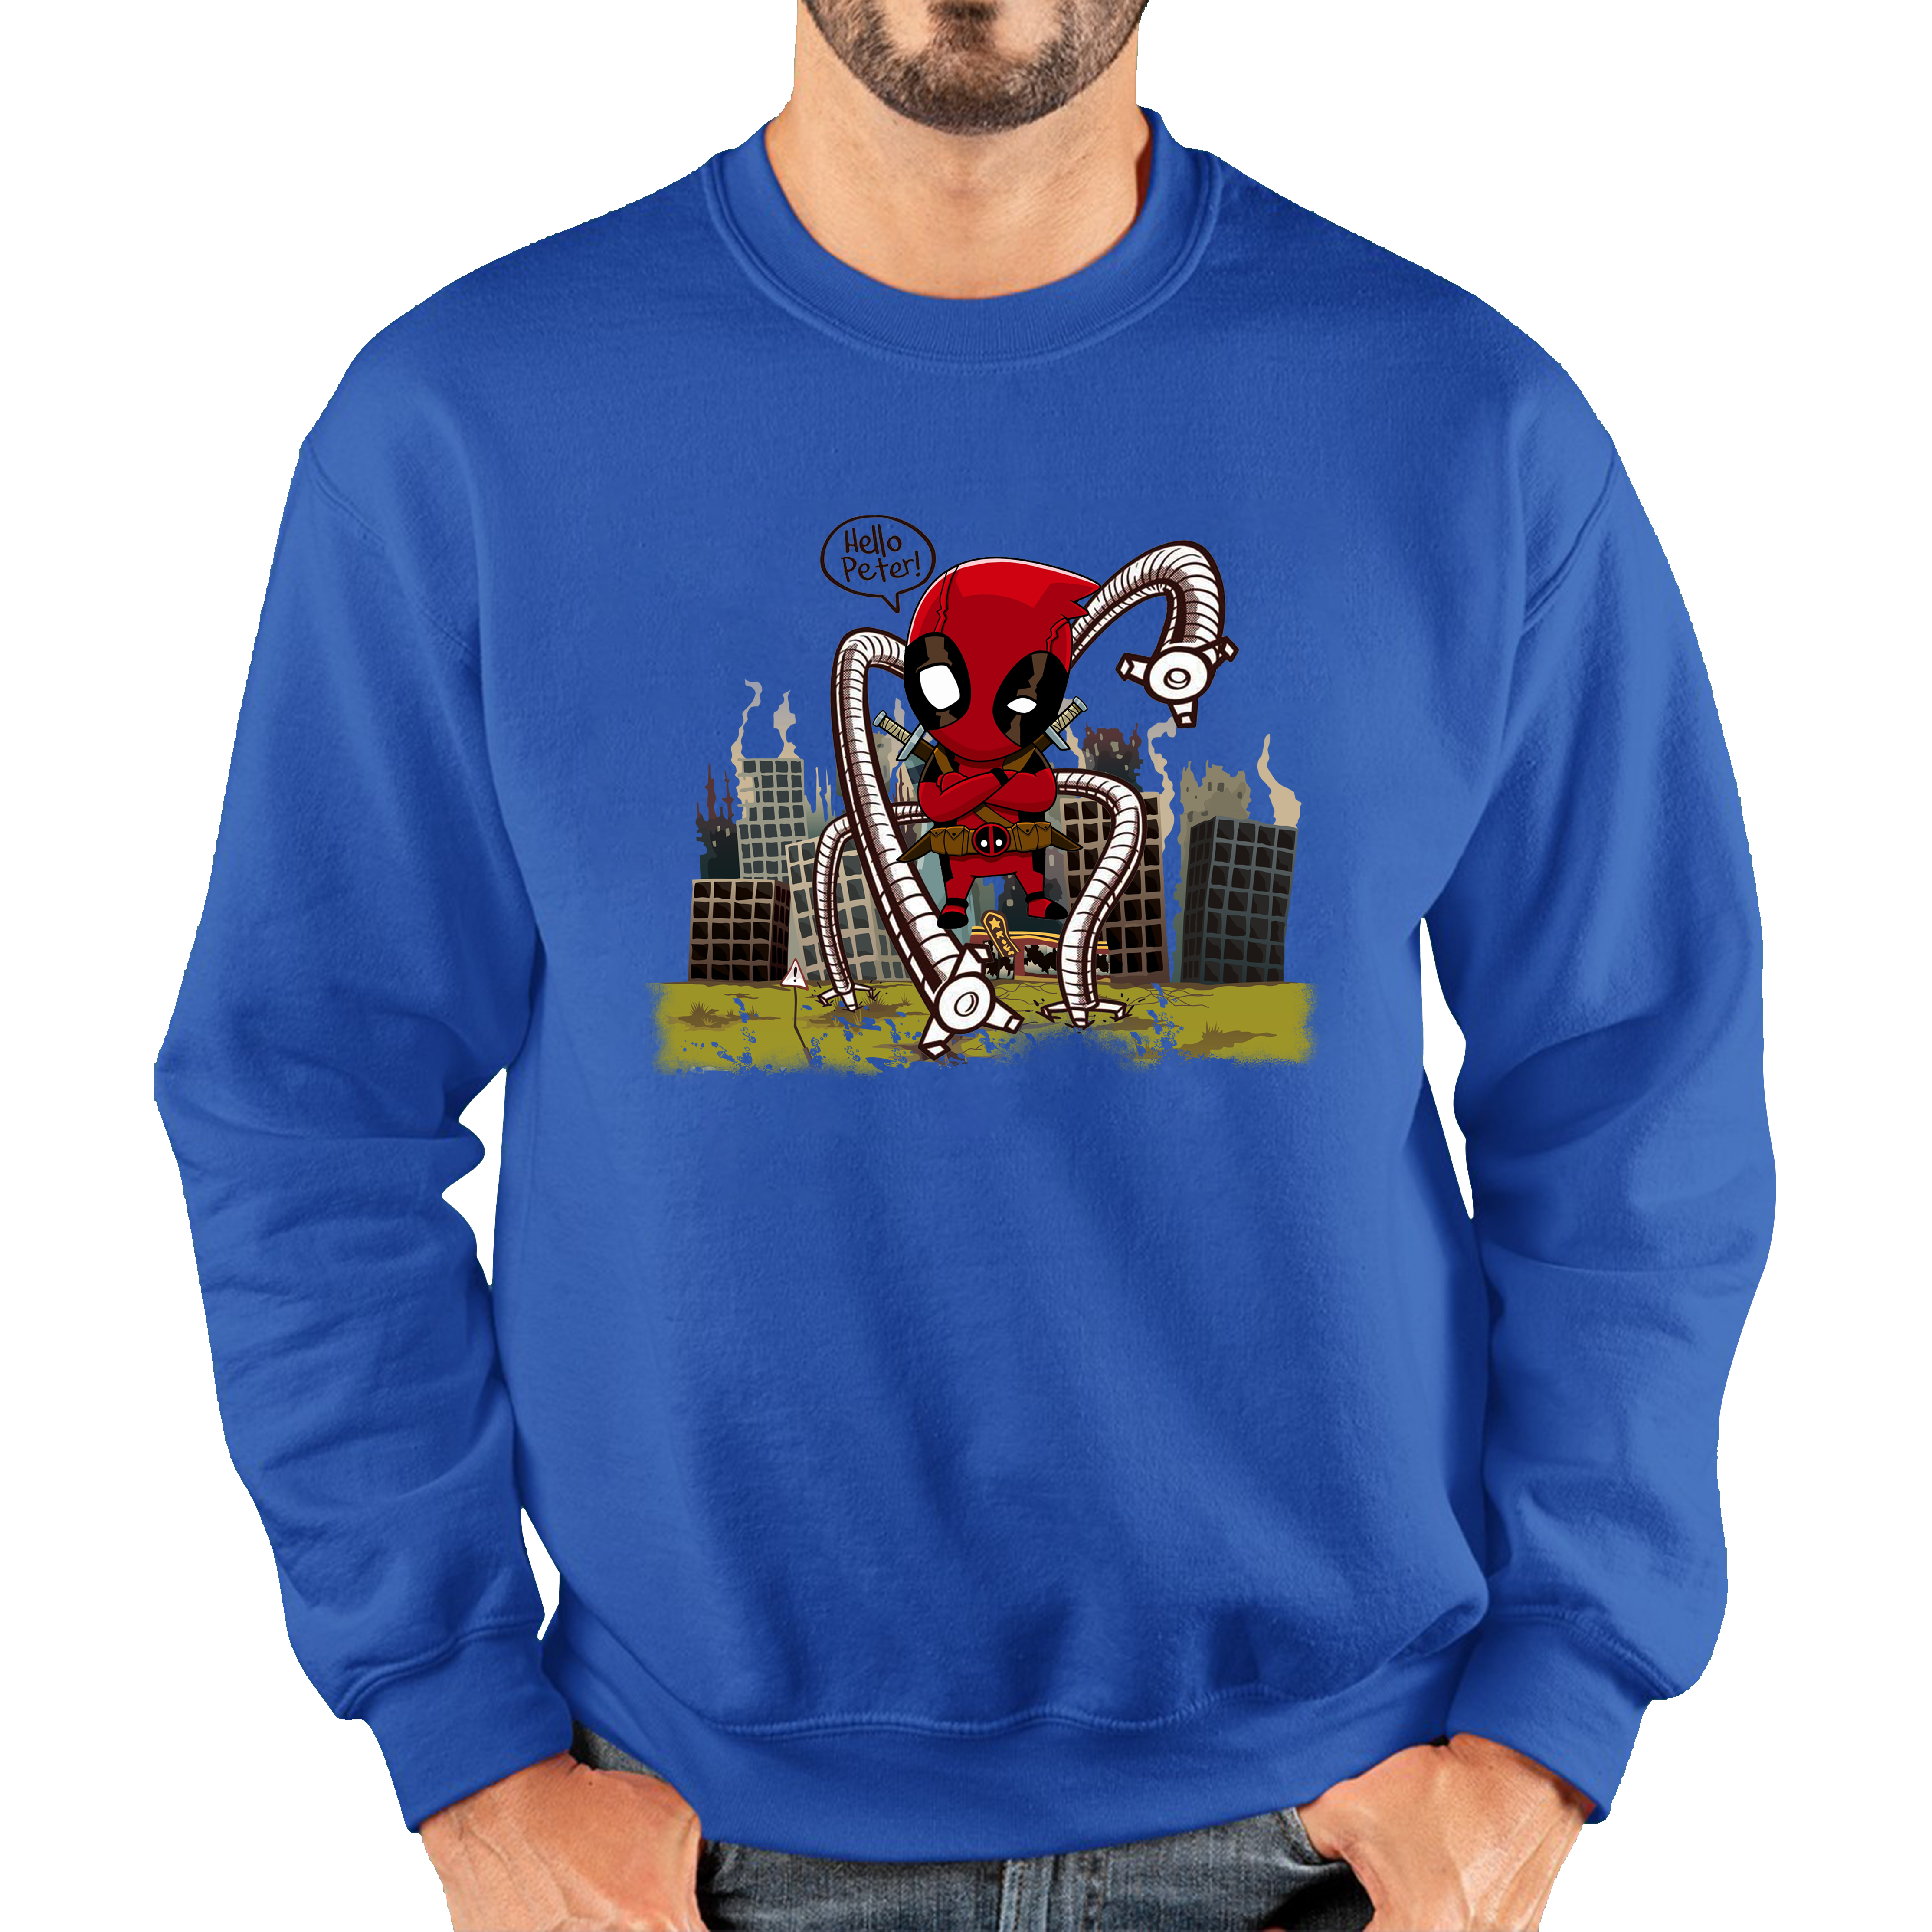 Hello Peter Spiderman x Deadpool Spoof Adult Sweatshirt